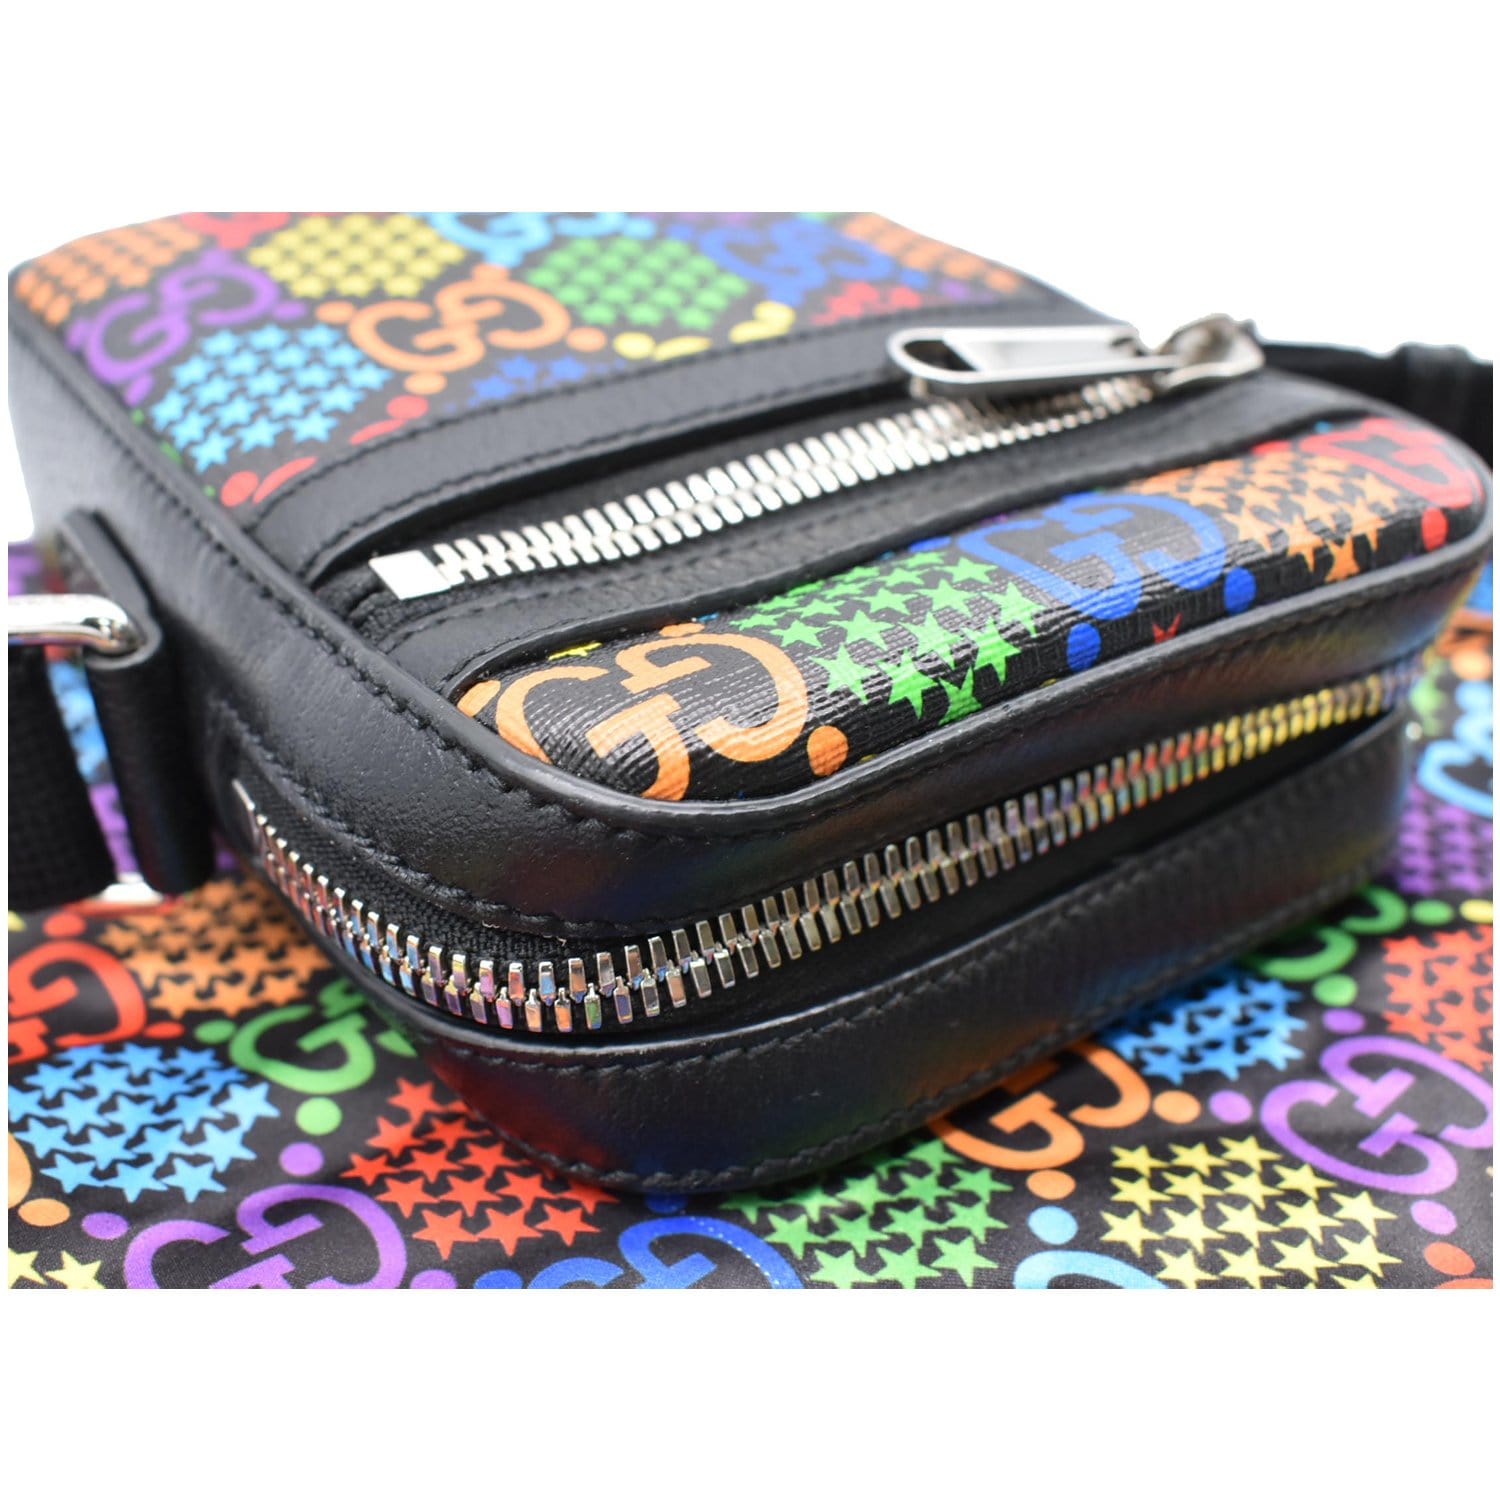 GUCCI GG Psychedelic Leather Bucket Shoulder Bag Multicolor 598149